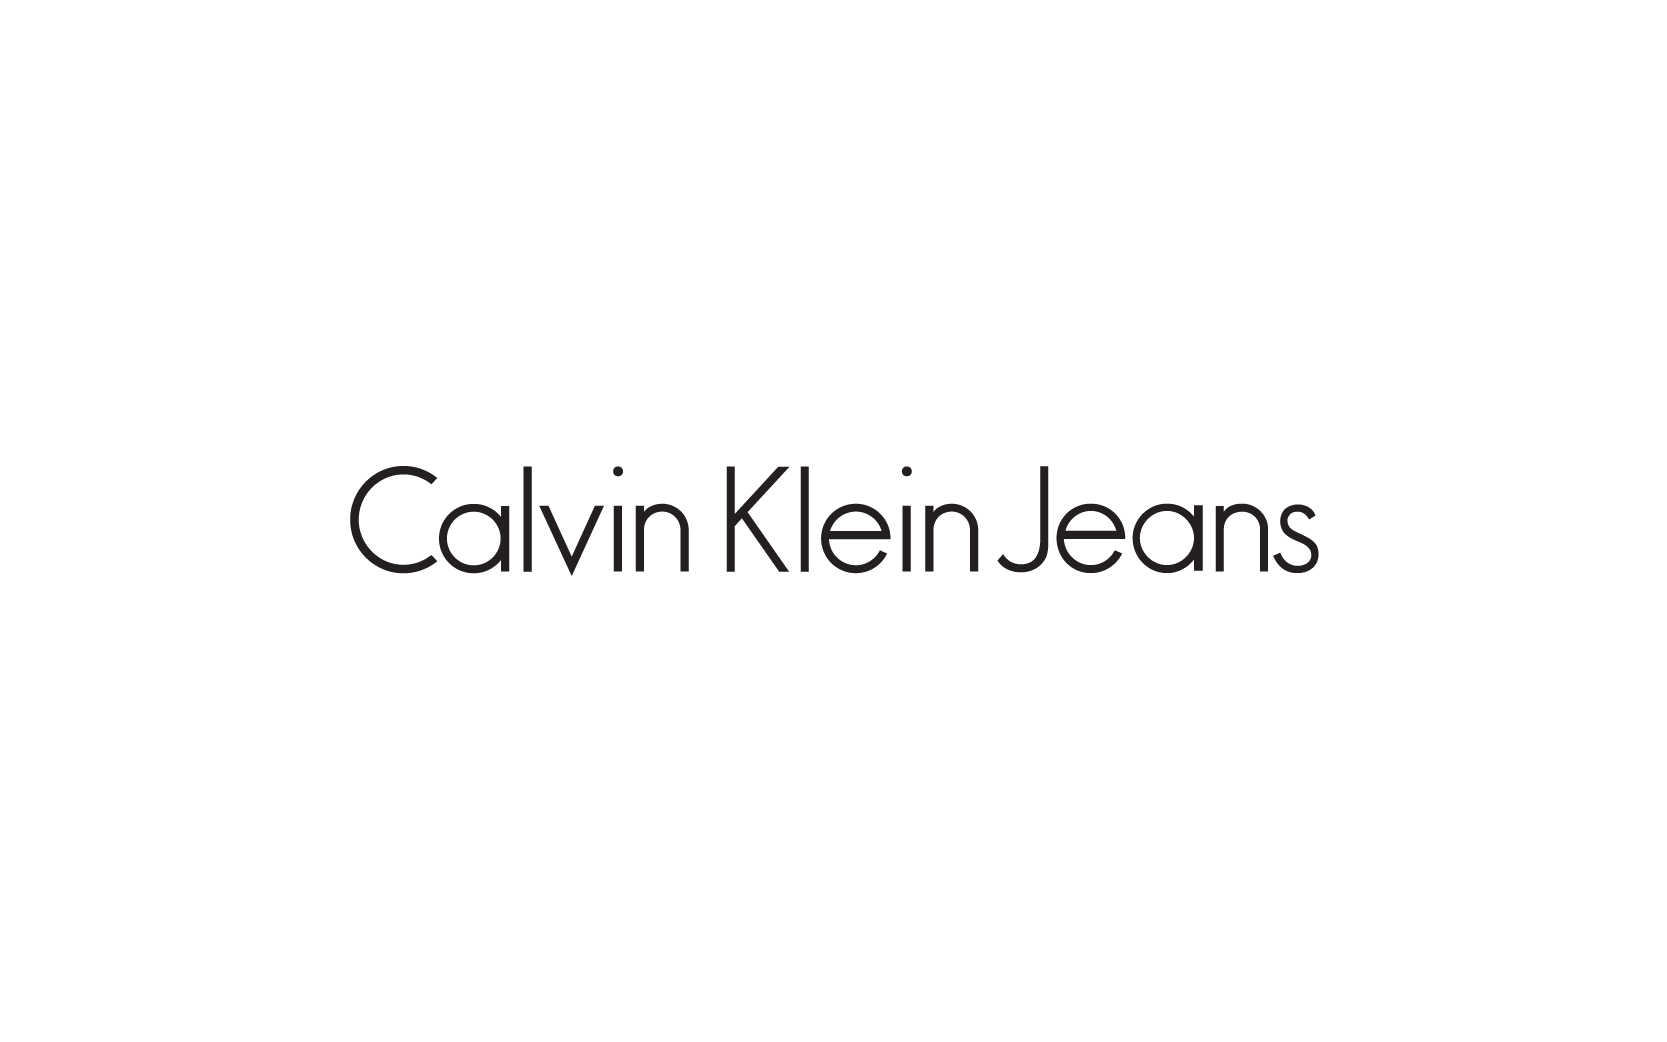 The Gardens Mall - Calvin Klein Jeans